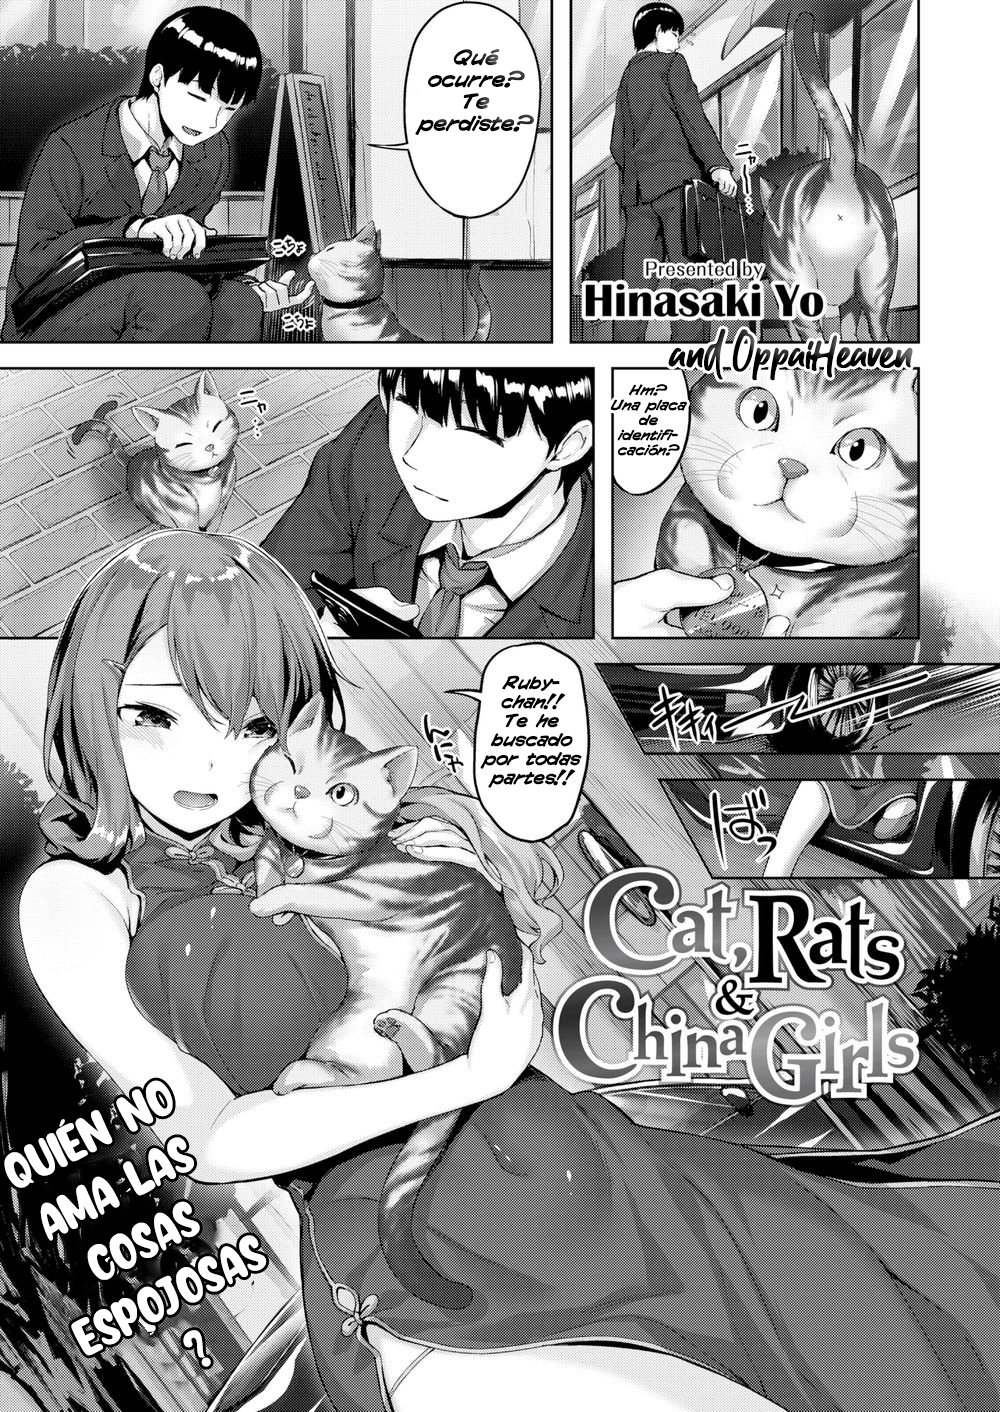 Cat-Rats & China Girls - 0